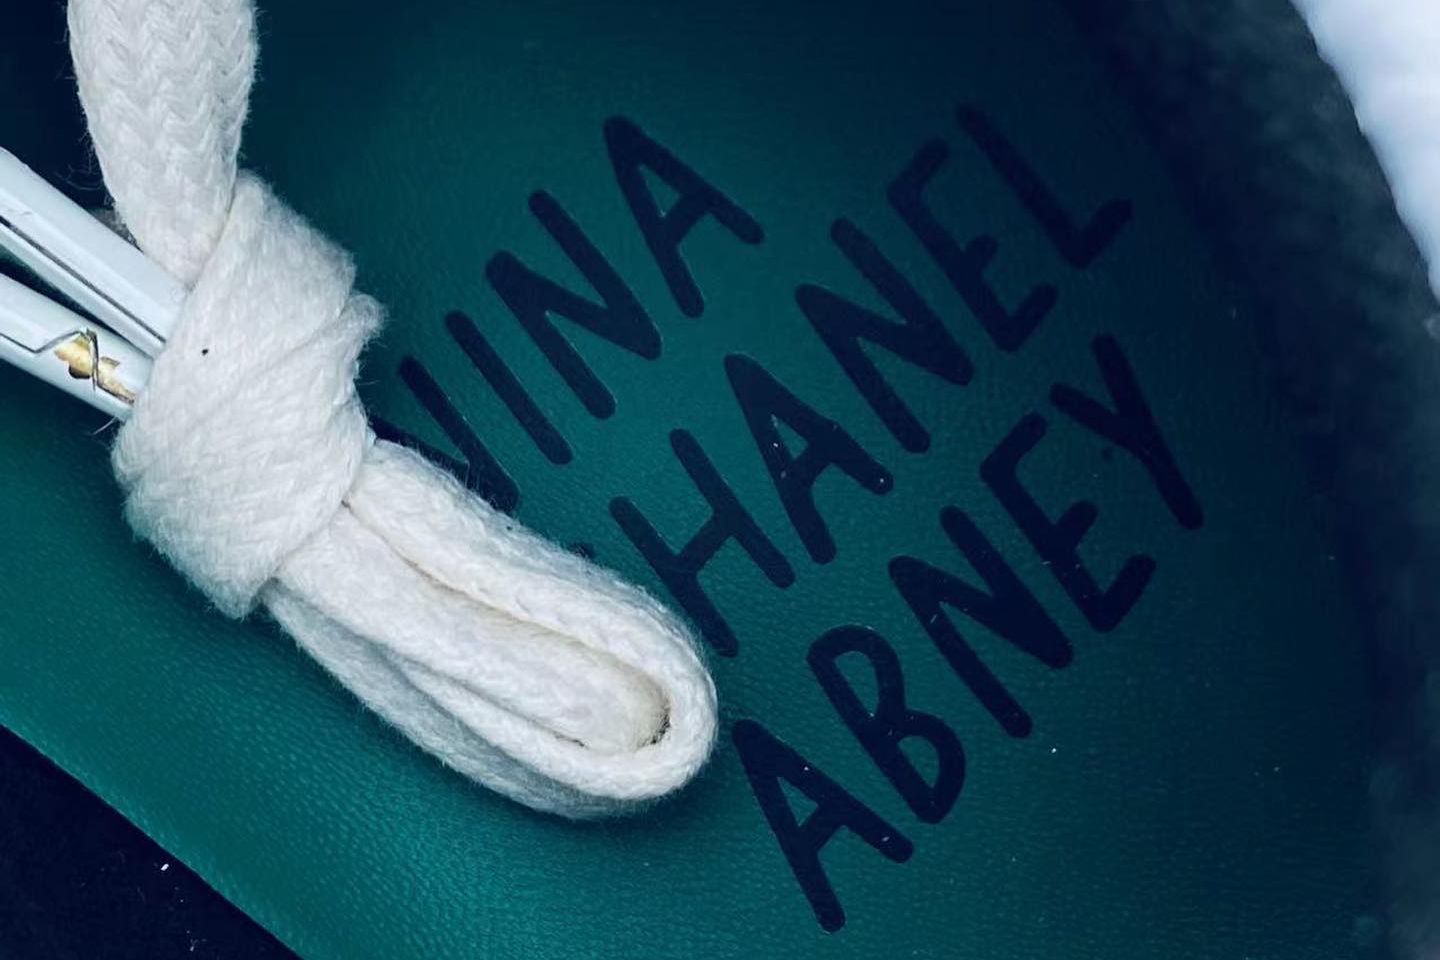 Nina Chanel Abney x Air Jordan 2 Low